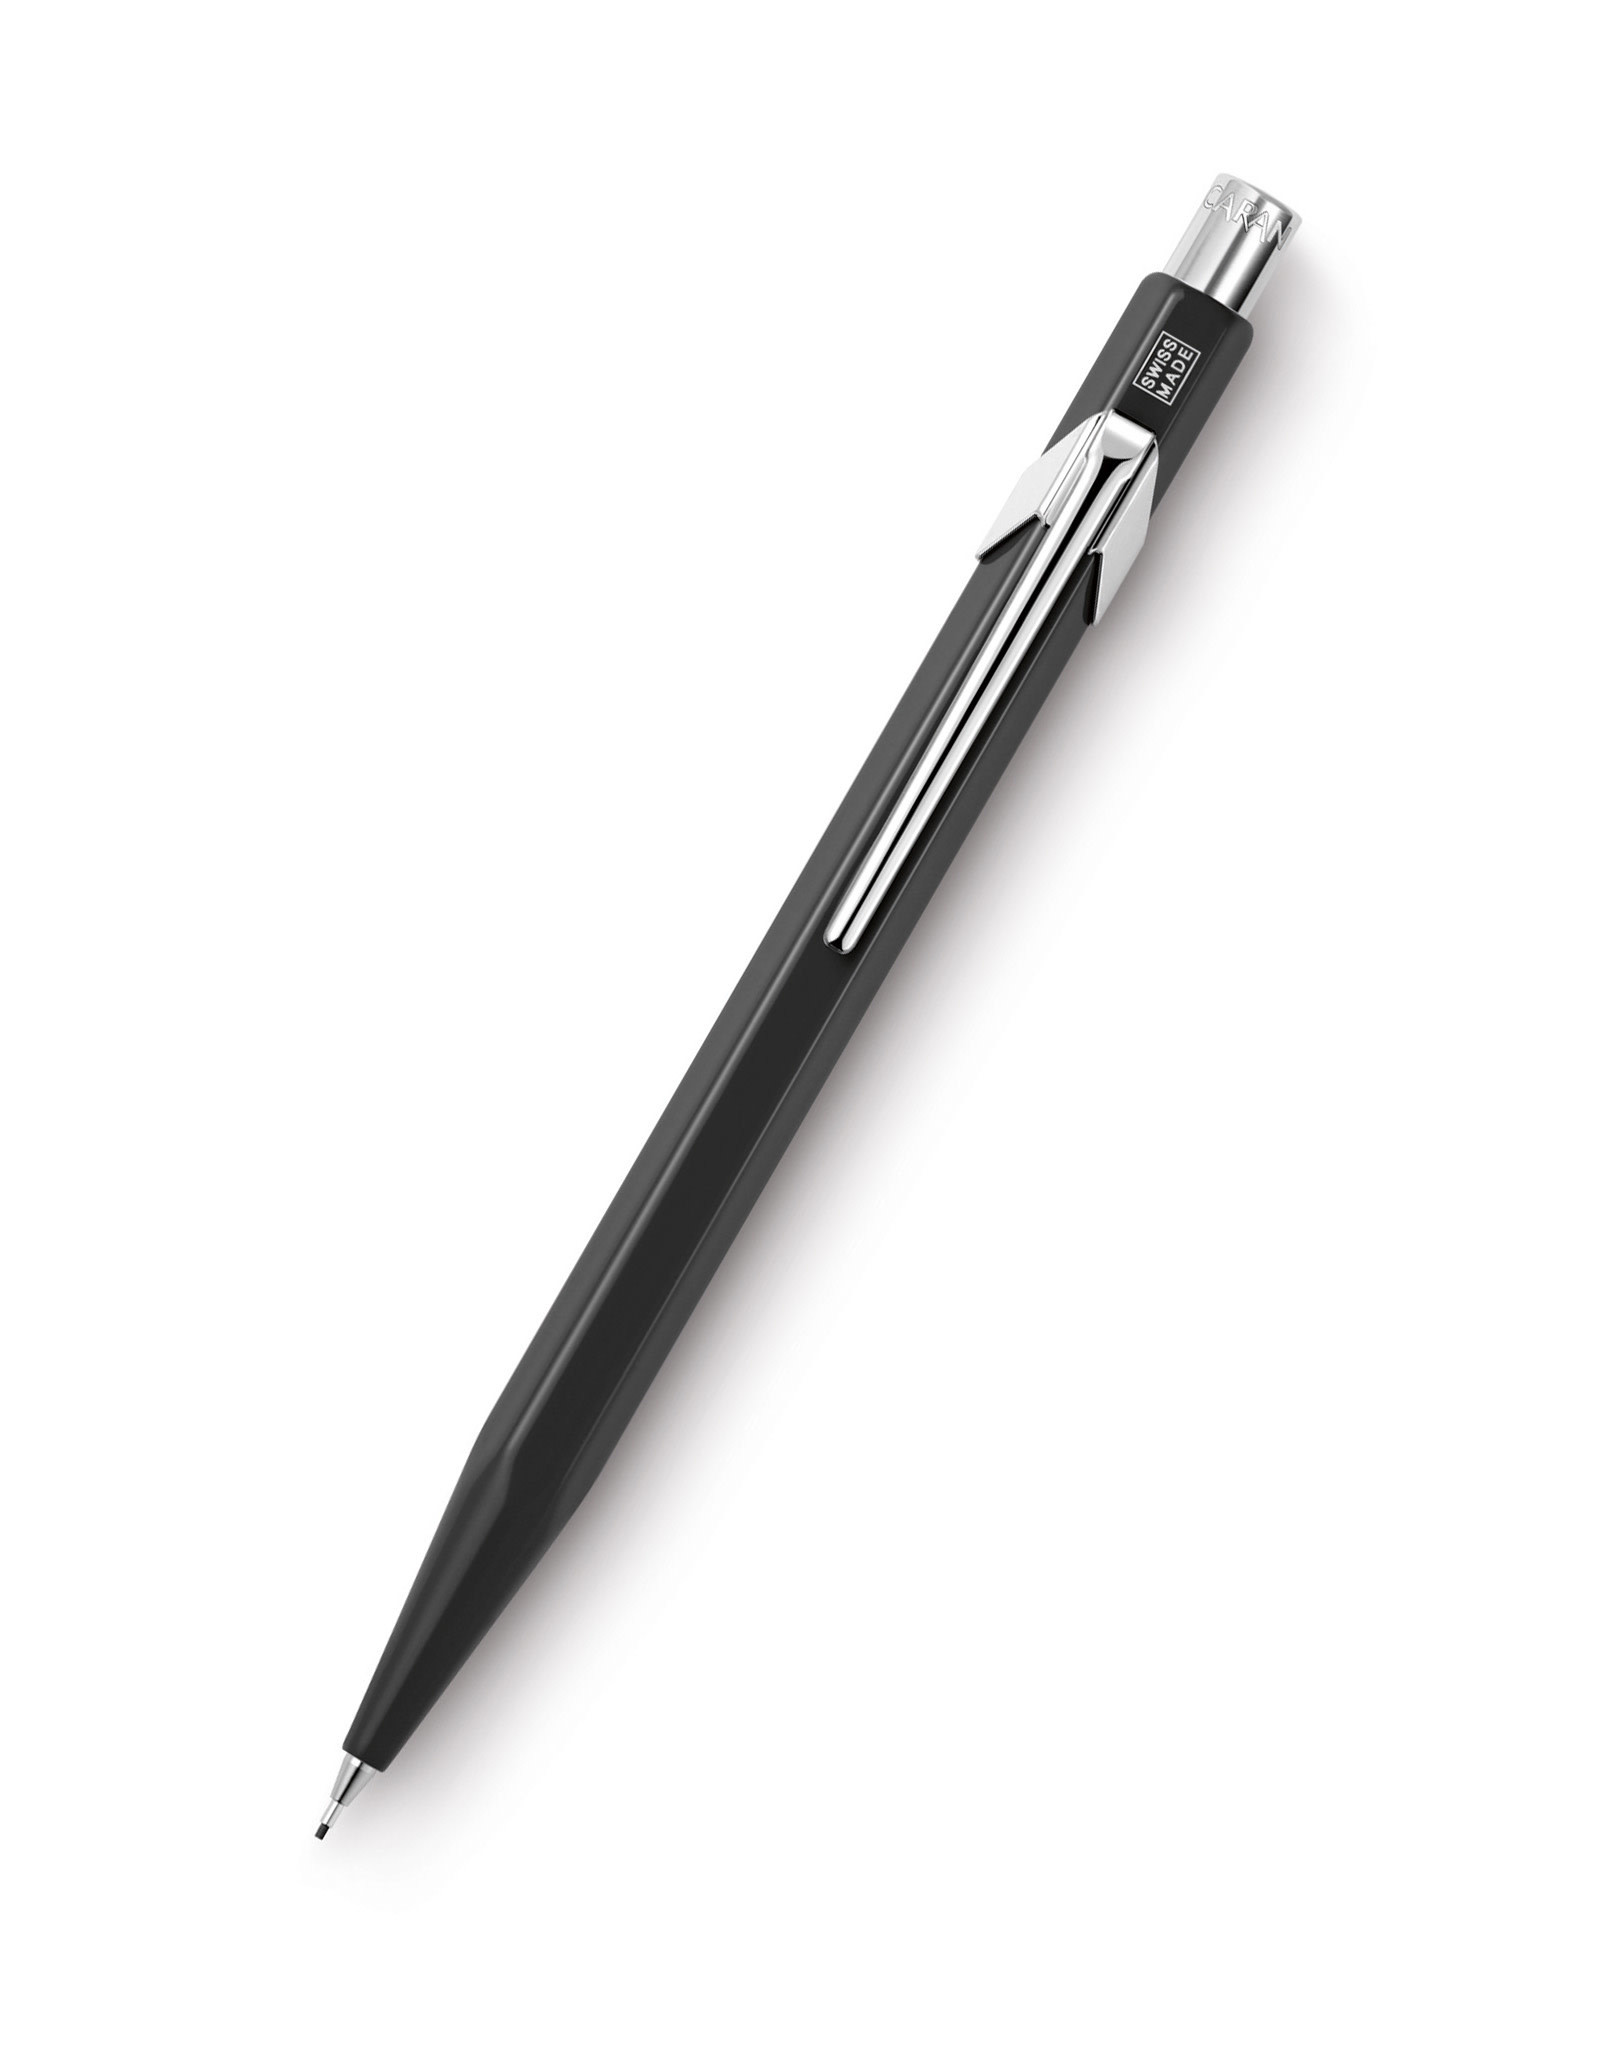 Caran d'Ache Caran D’Ache 844 Mechanical Pencil, Black